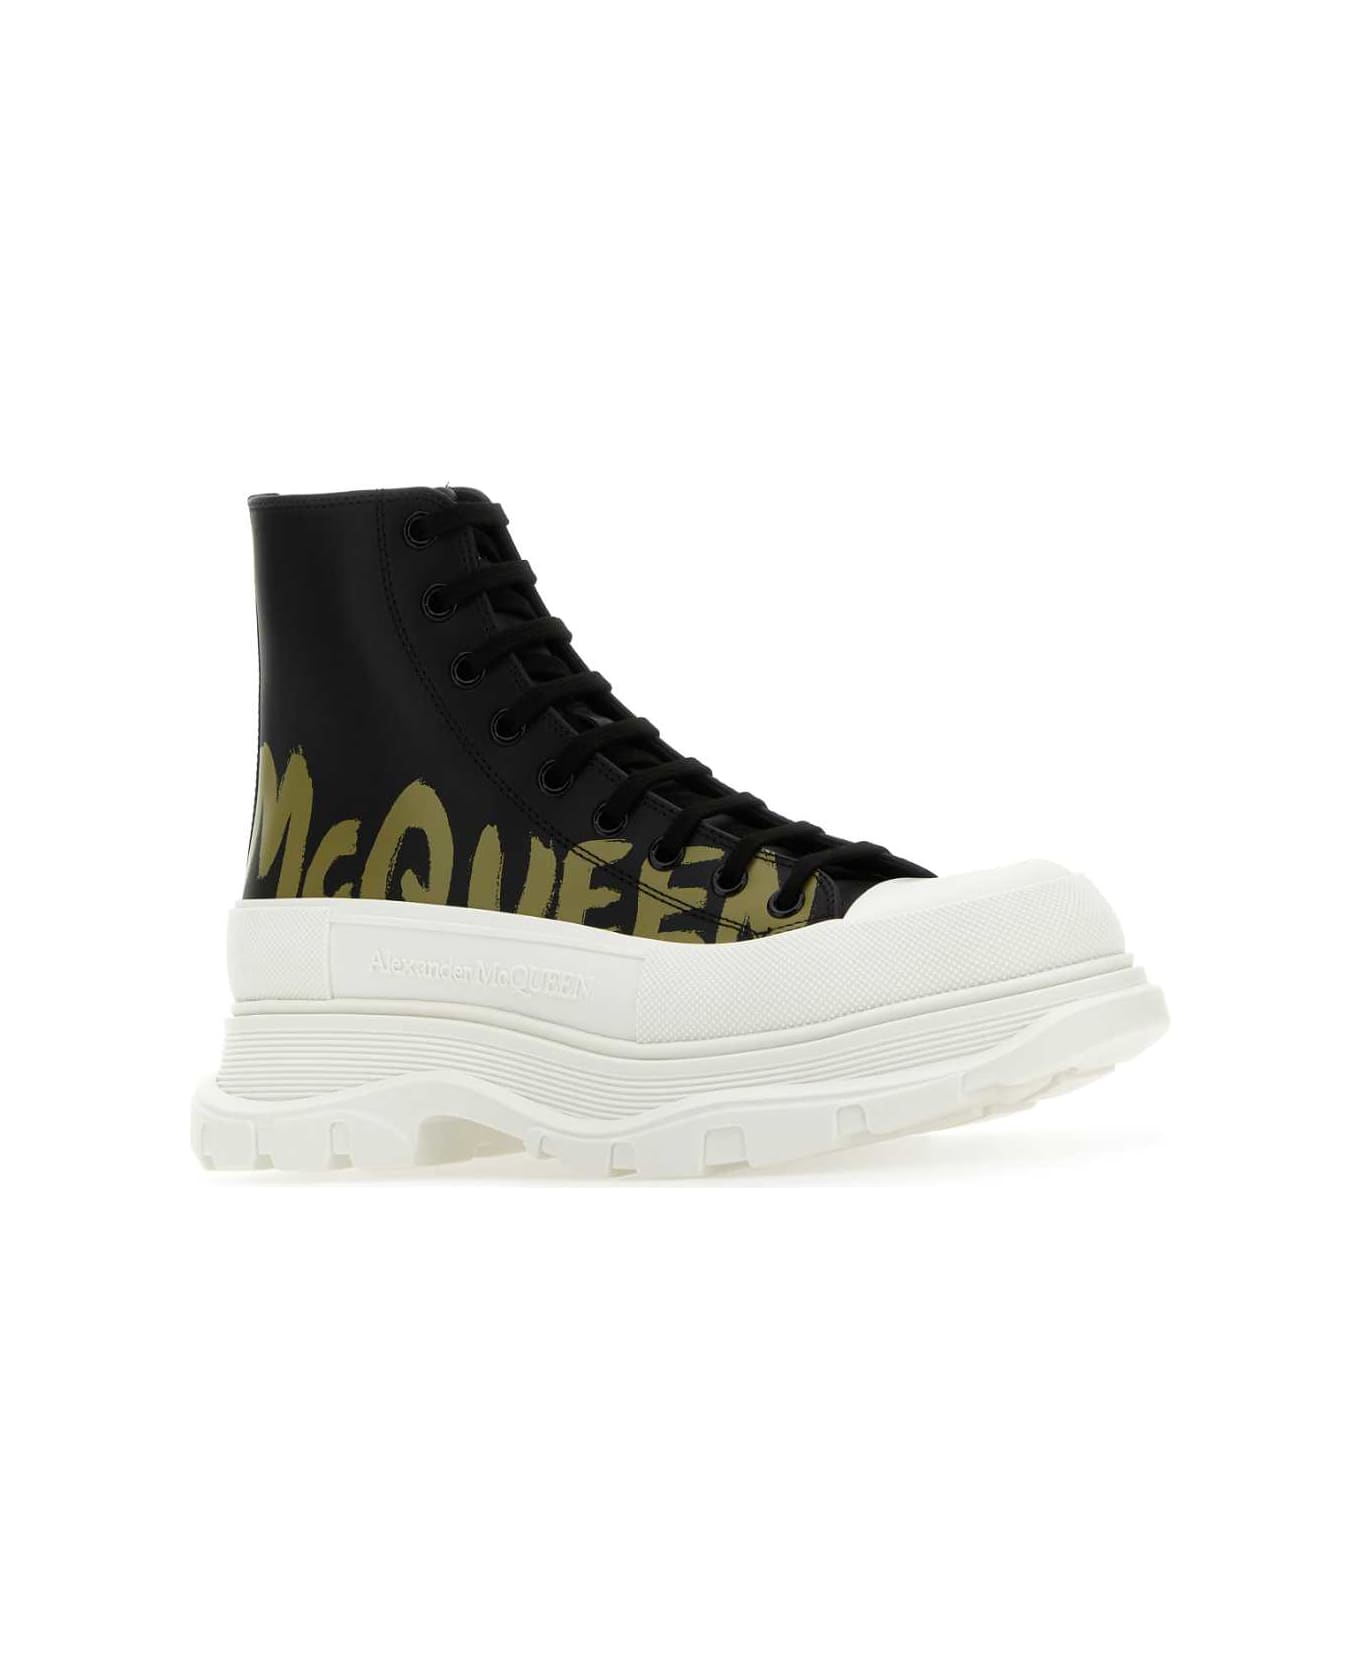 Alexander McQueen Black Leather Tread Slick Sneakers - BLKOFWHPALEKHAKI